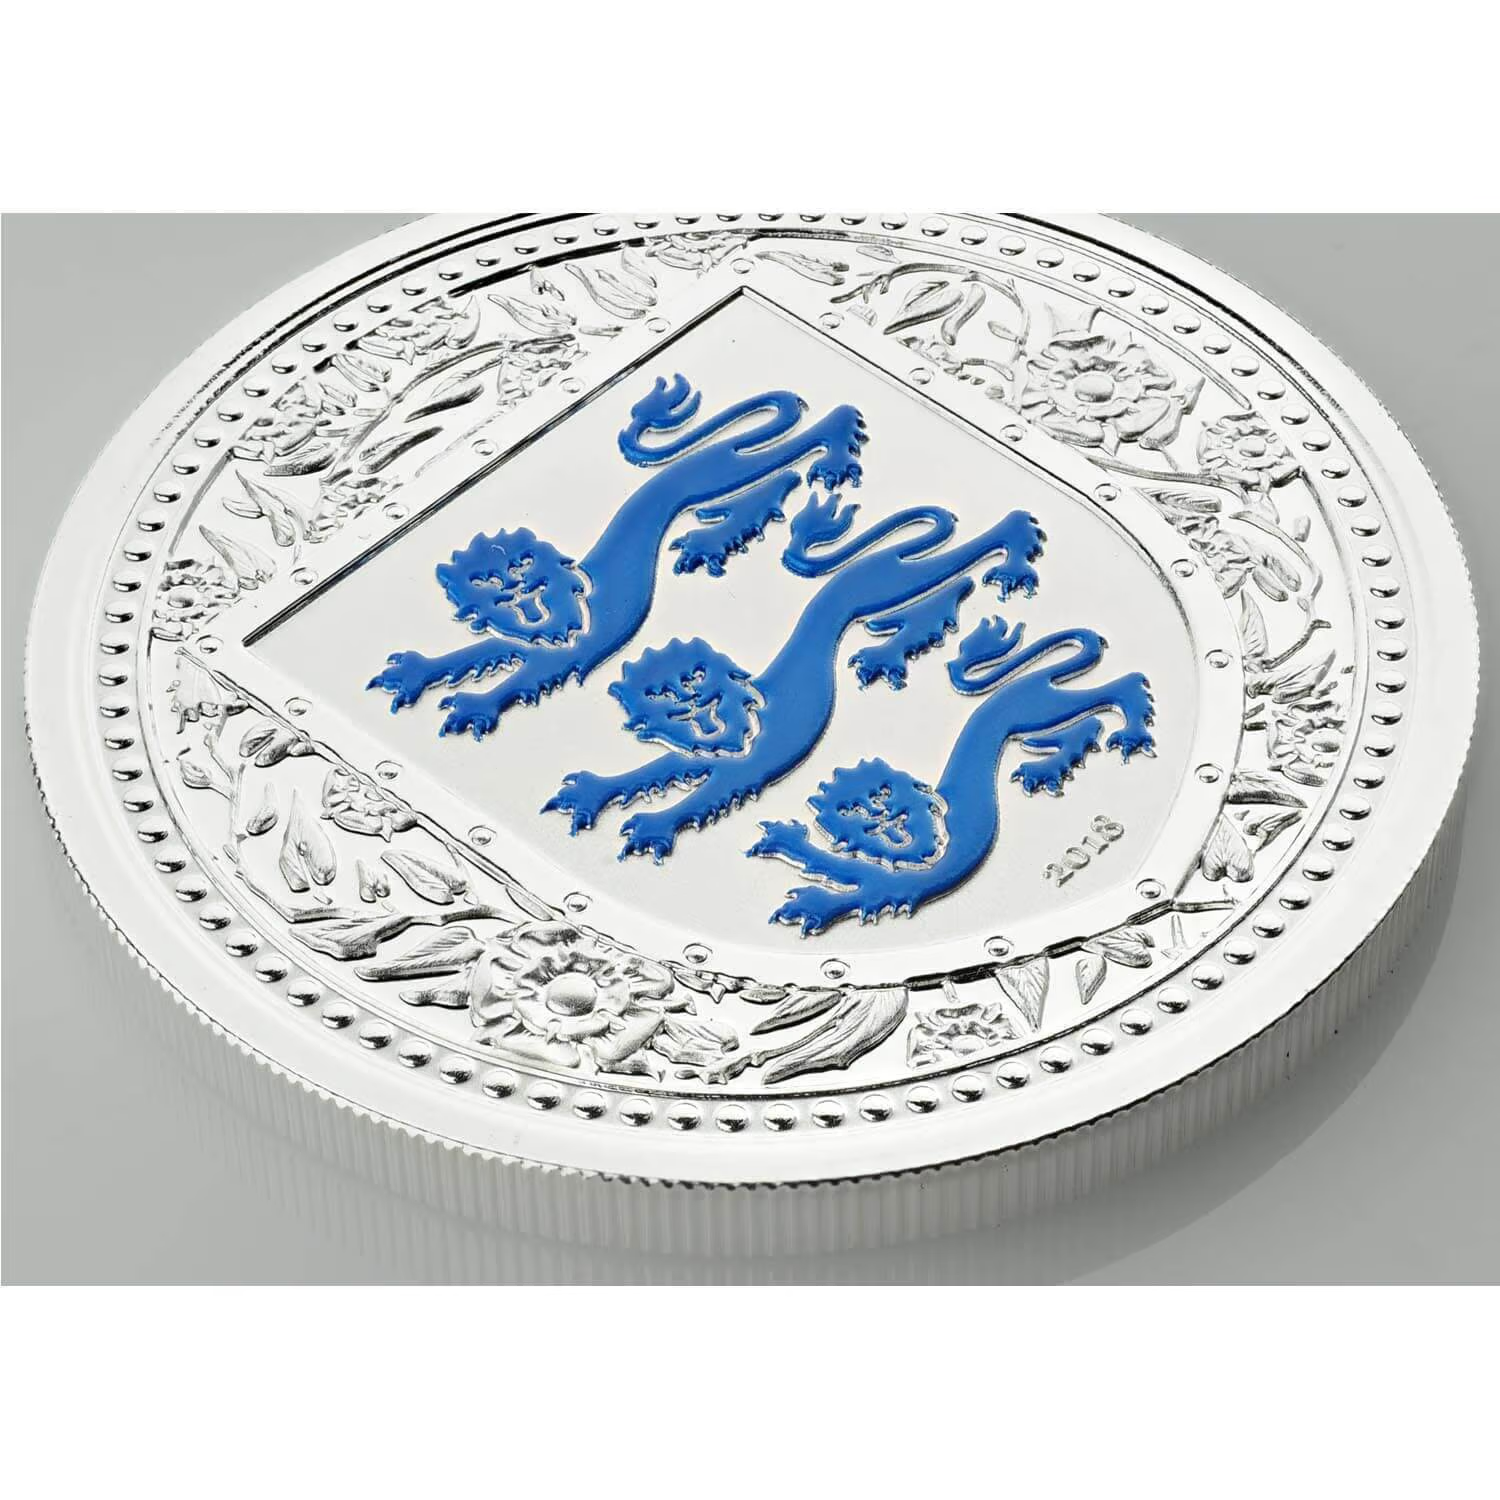 1 Oz Silver Coin 2018 Gibraltar £2 Royal Arms of England Color Proof - Blue-classypw.com-1